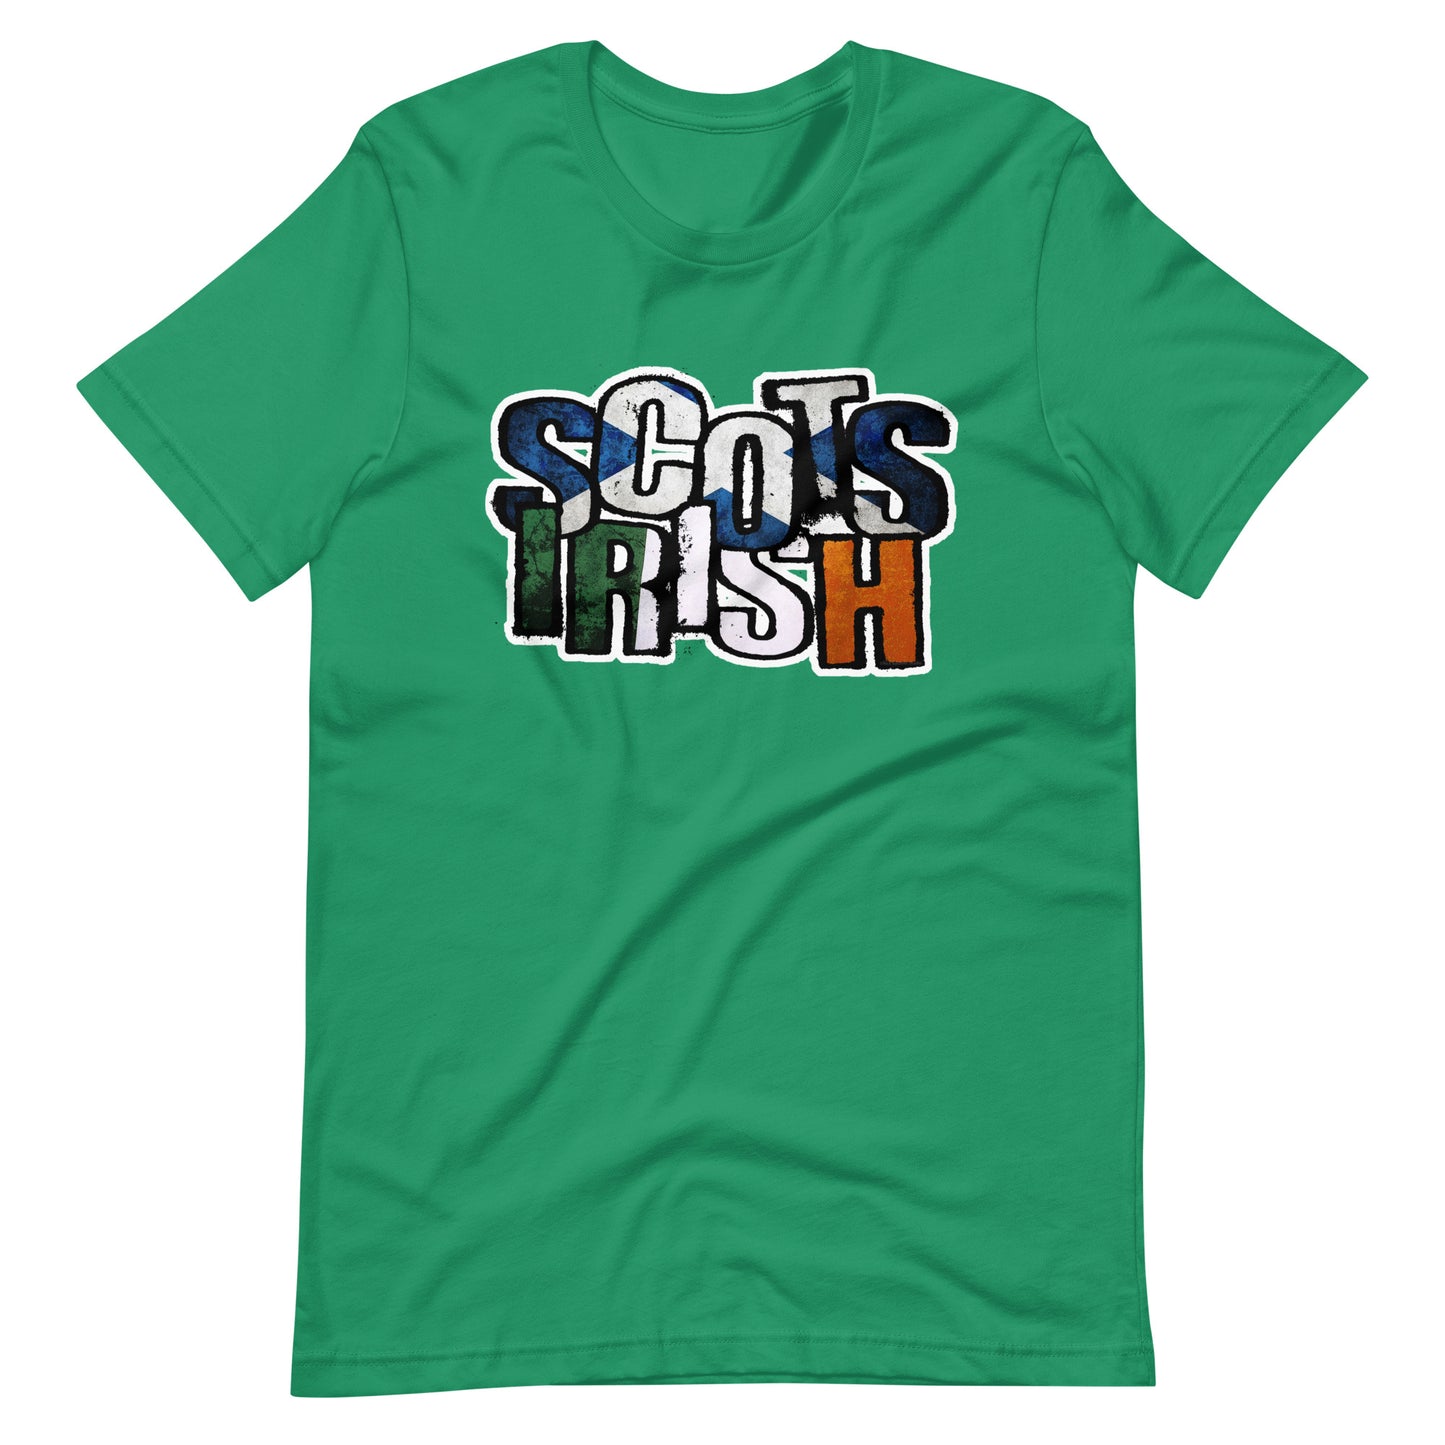 Scots Irish Unisex T-shirt